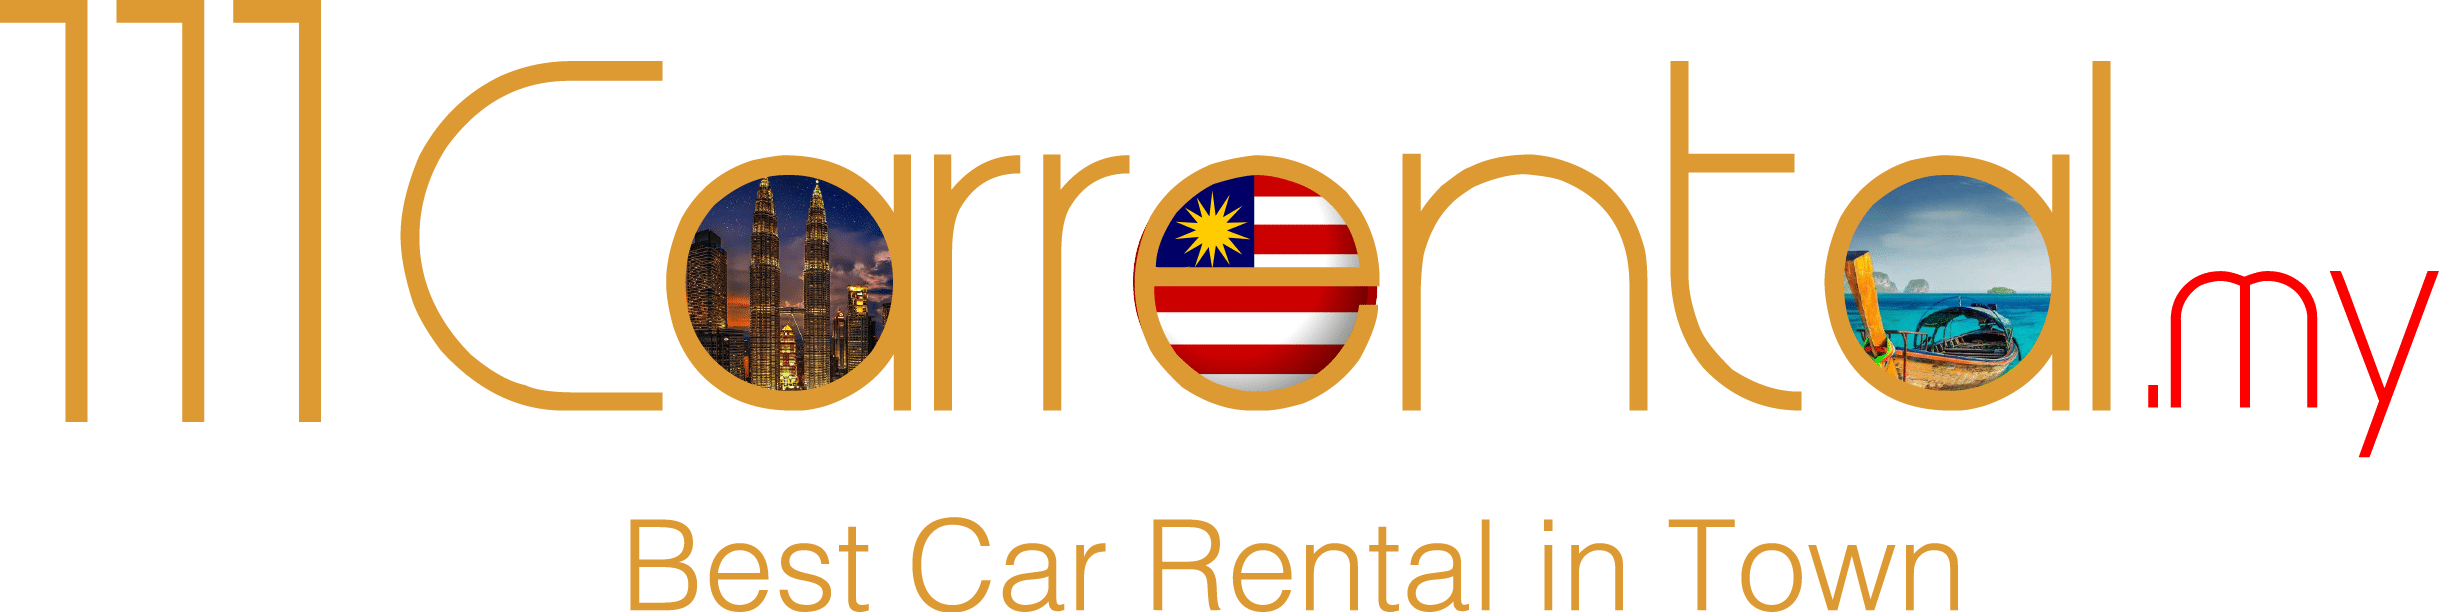 111 Car Rental | Best Car Rental Service